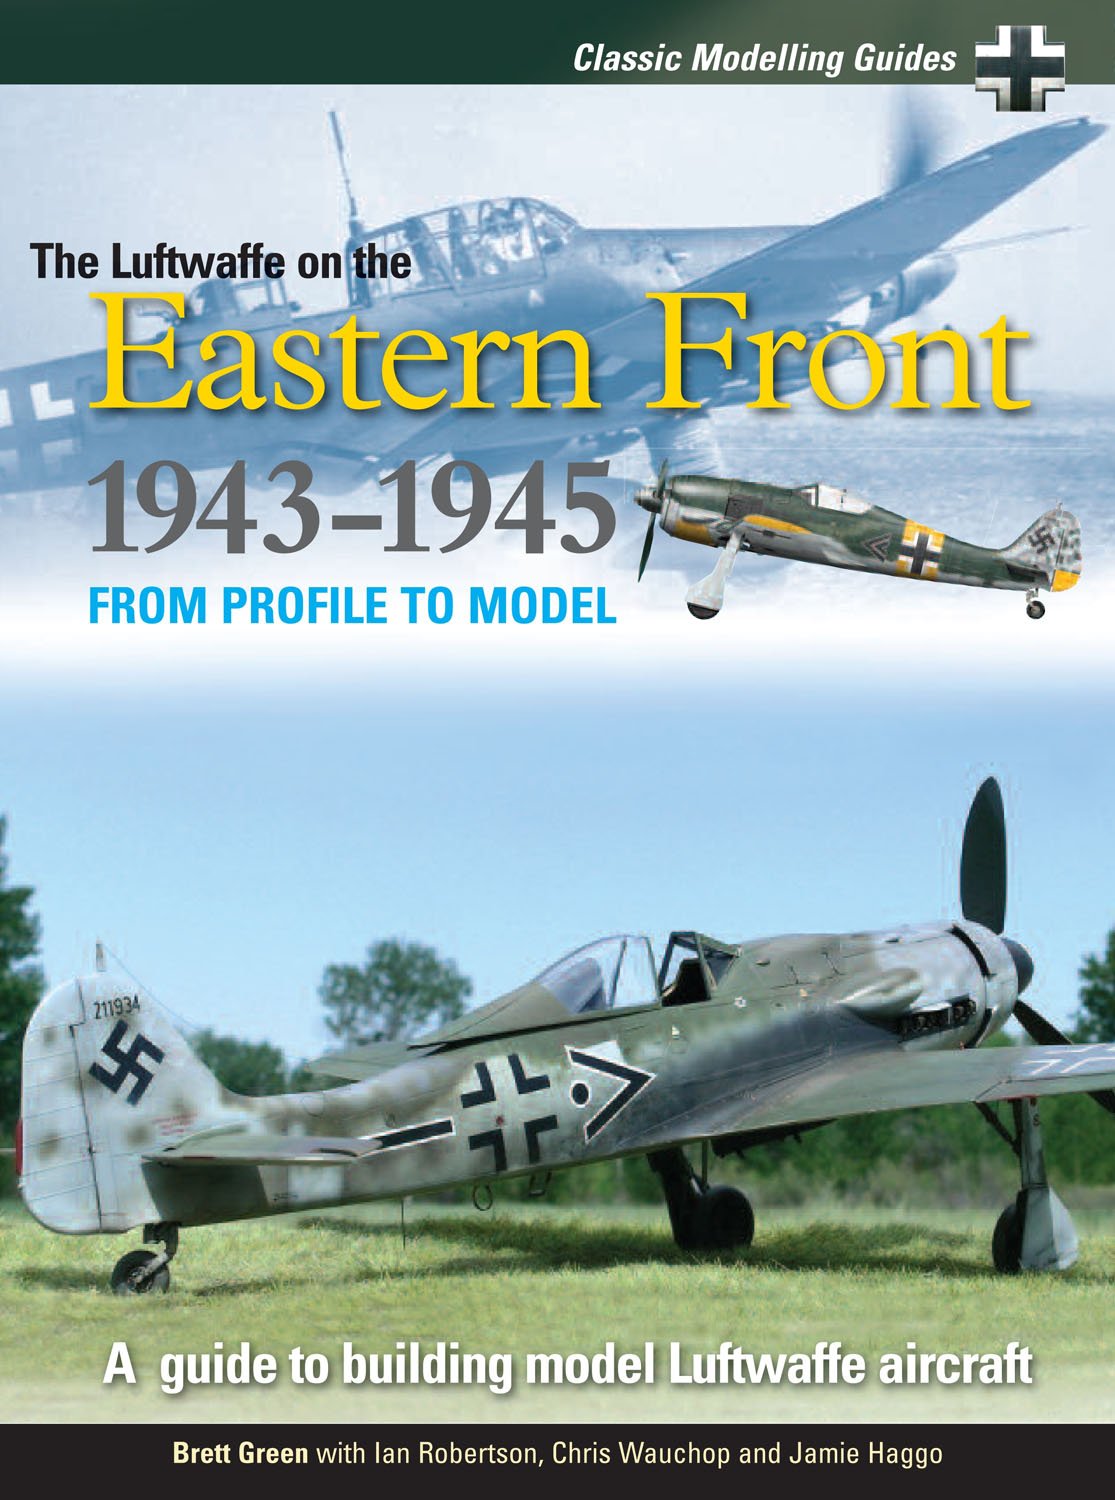 Classic Modeling Guide 2: Die Luftwaffe an der Ostfront: 1943-1945 